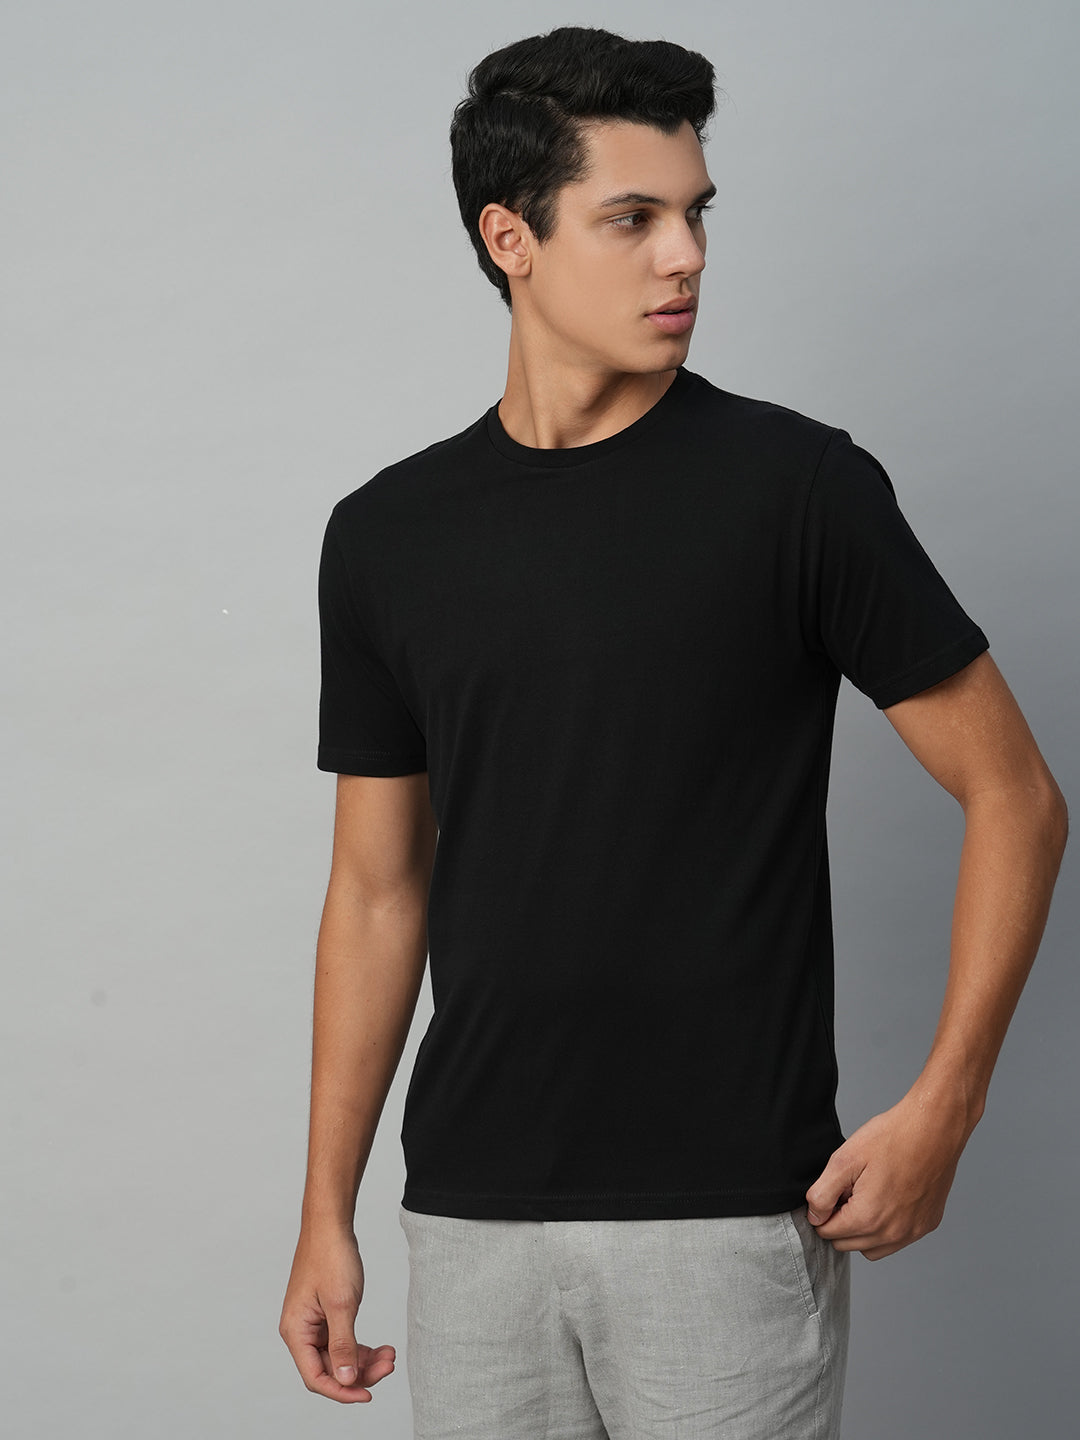 Men's Black Cotton Regular Fit Tshirt